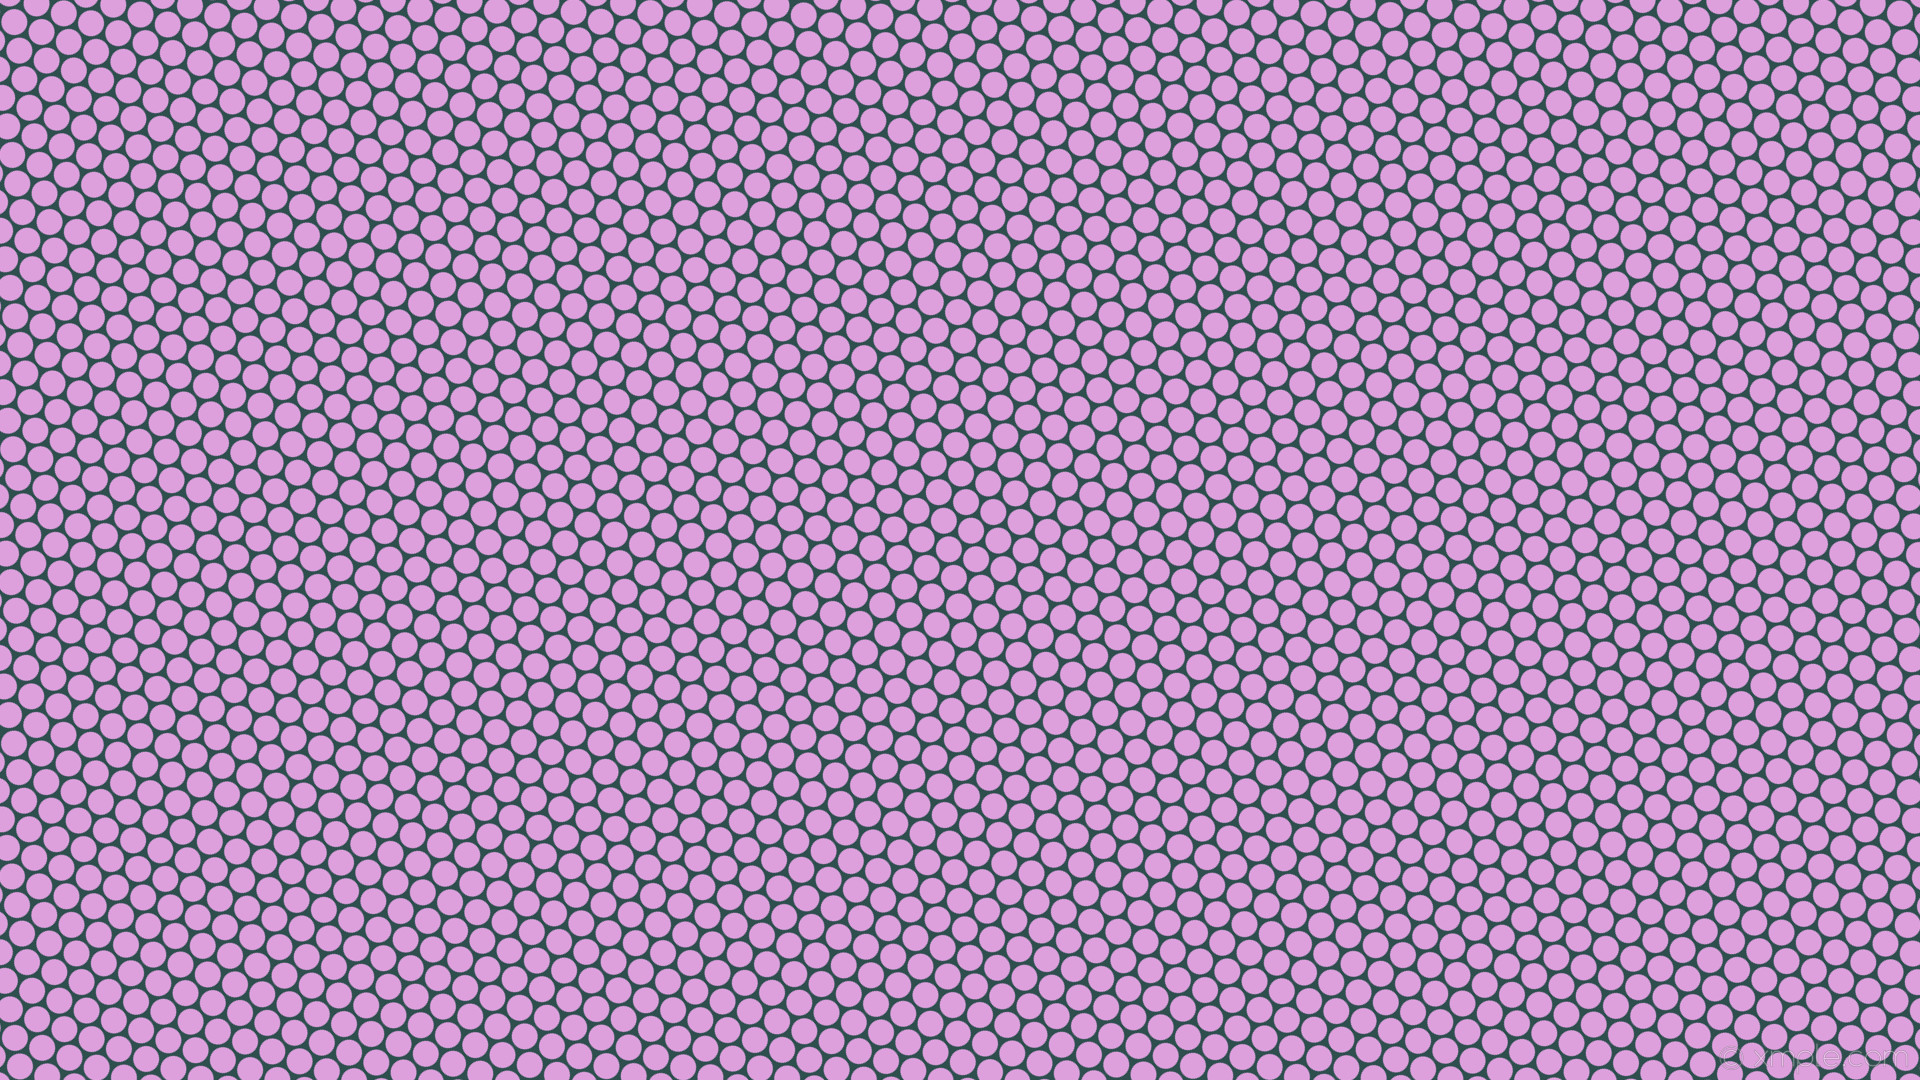 1920x1080 wallpaper purple hexagon grey polka dots dark slate gray plum #2f4f4f  #dda0dd diagonal 40